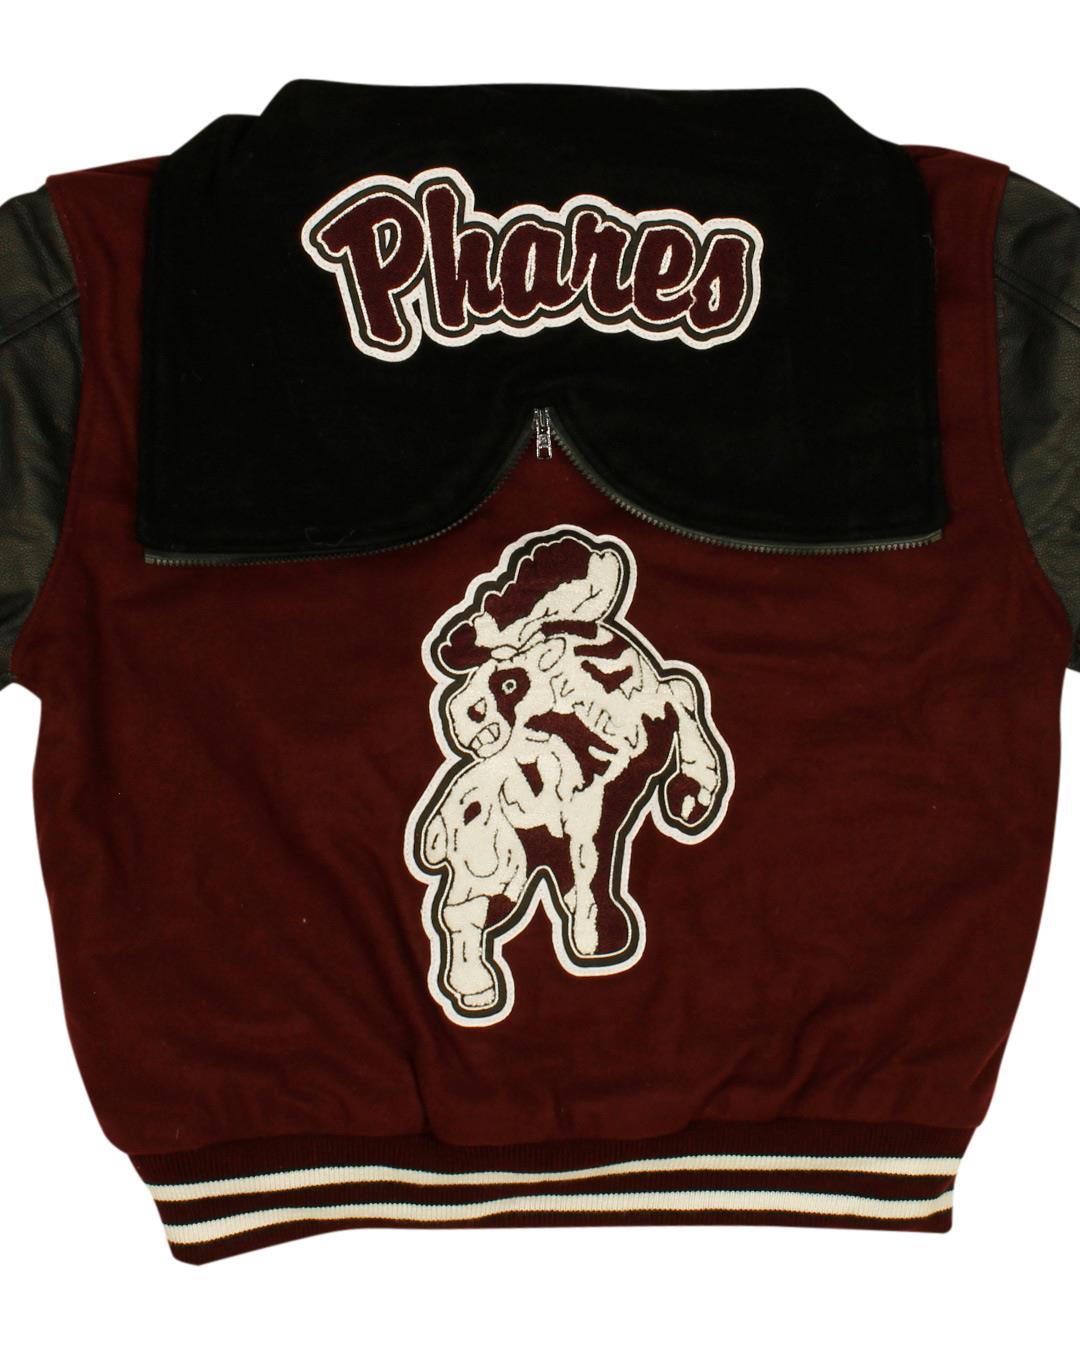 Alamosa High School Letterman Jacket, Alamosa CO - Back